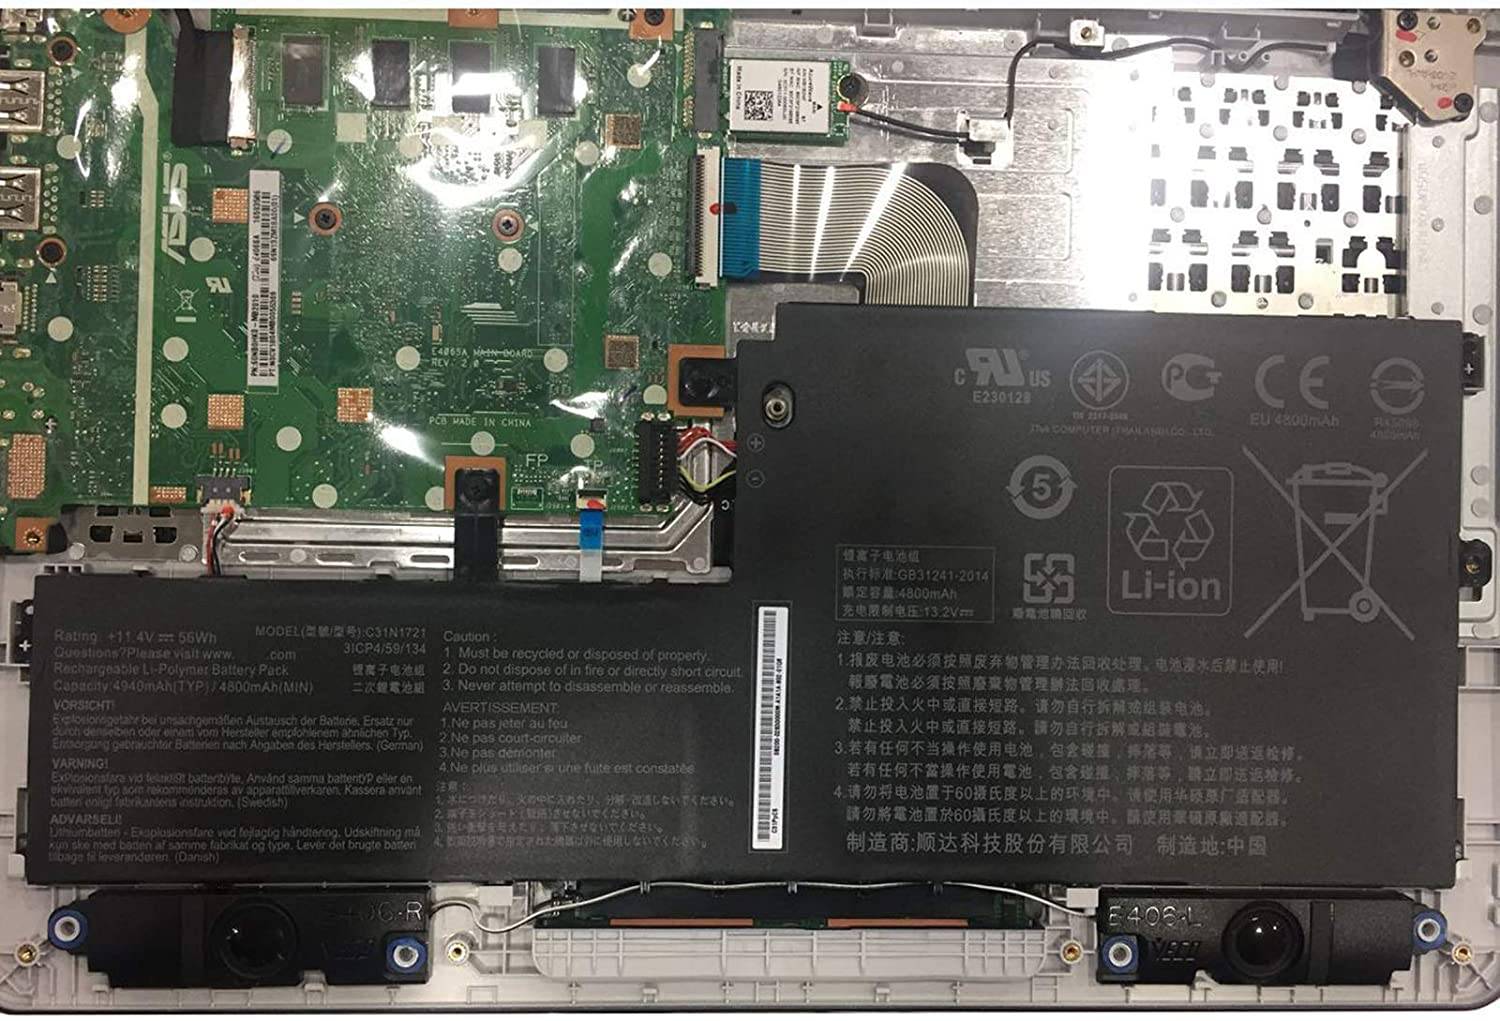 bateria-para-laptop-asus-vivobook-l406m-quito-ecuador-idkmanager-modelo-c31n1721-1222.jpg